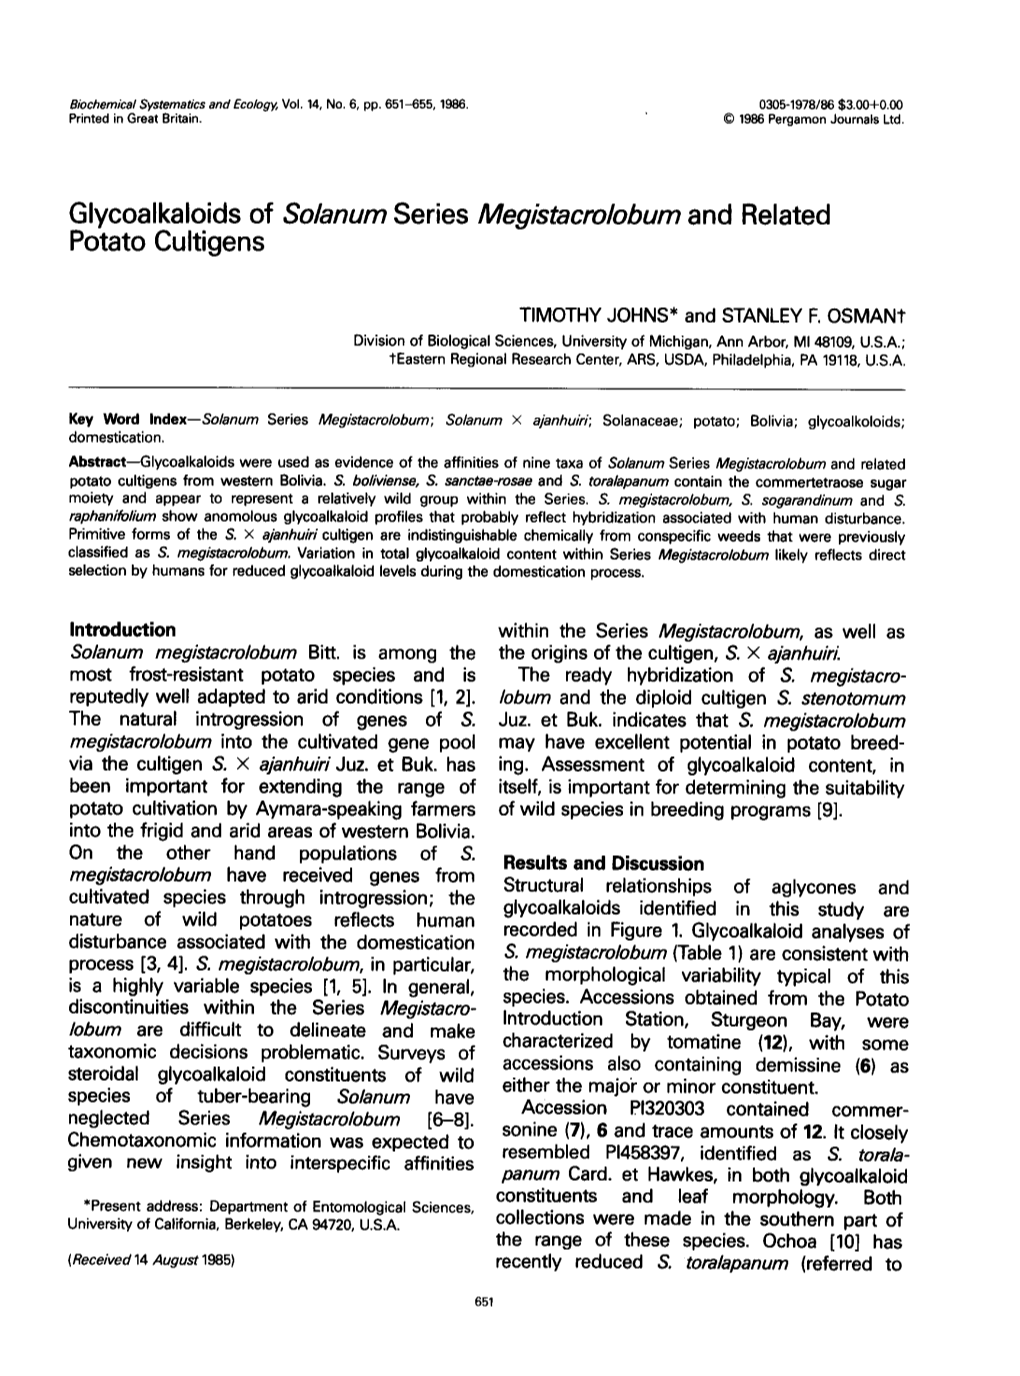 Glycoalkaloids of Solanum Series Megistacrolobum and Related